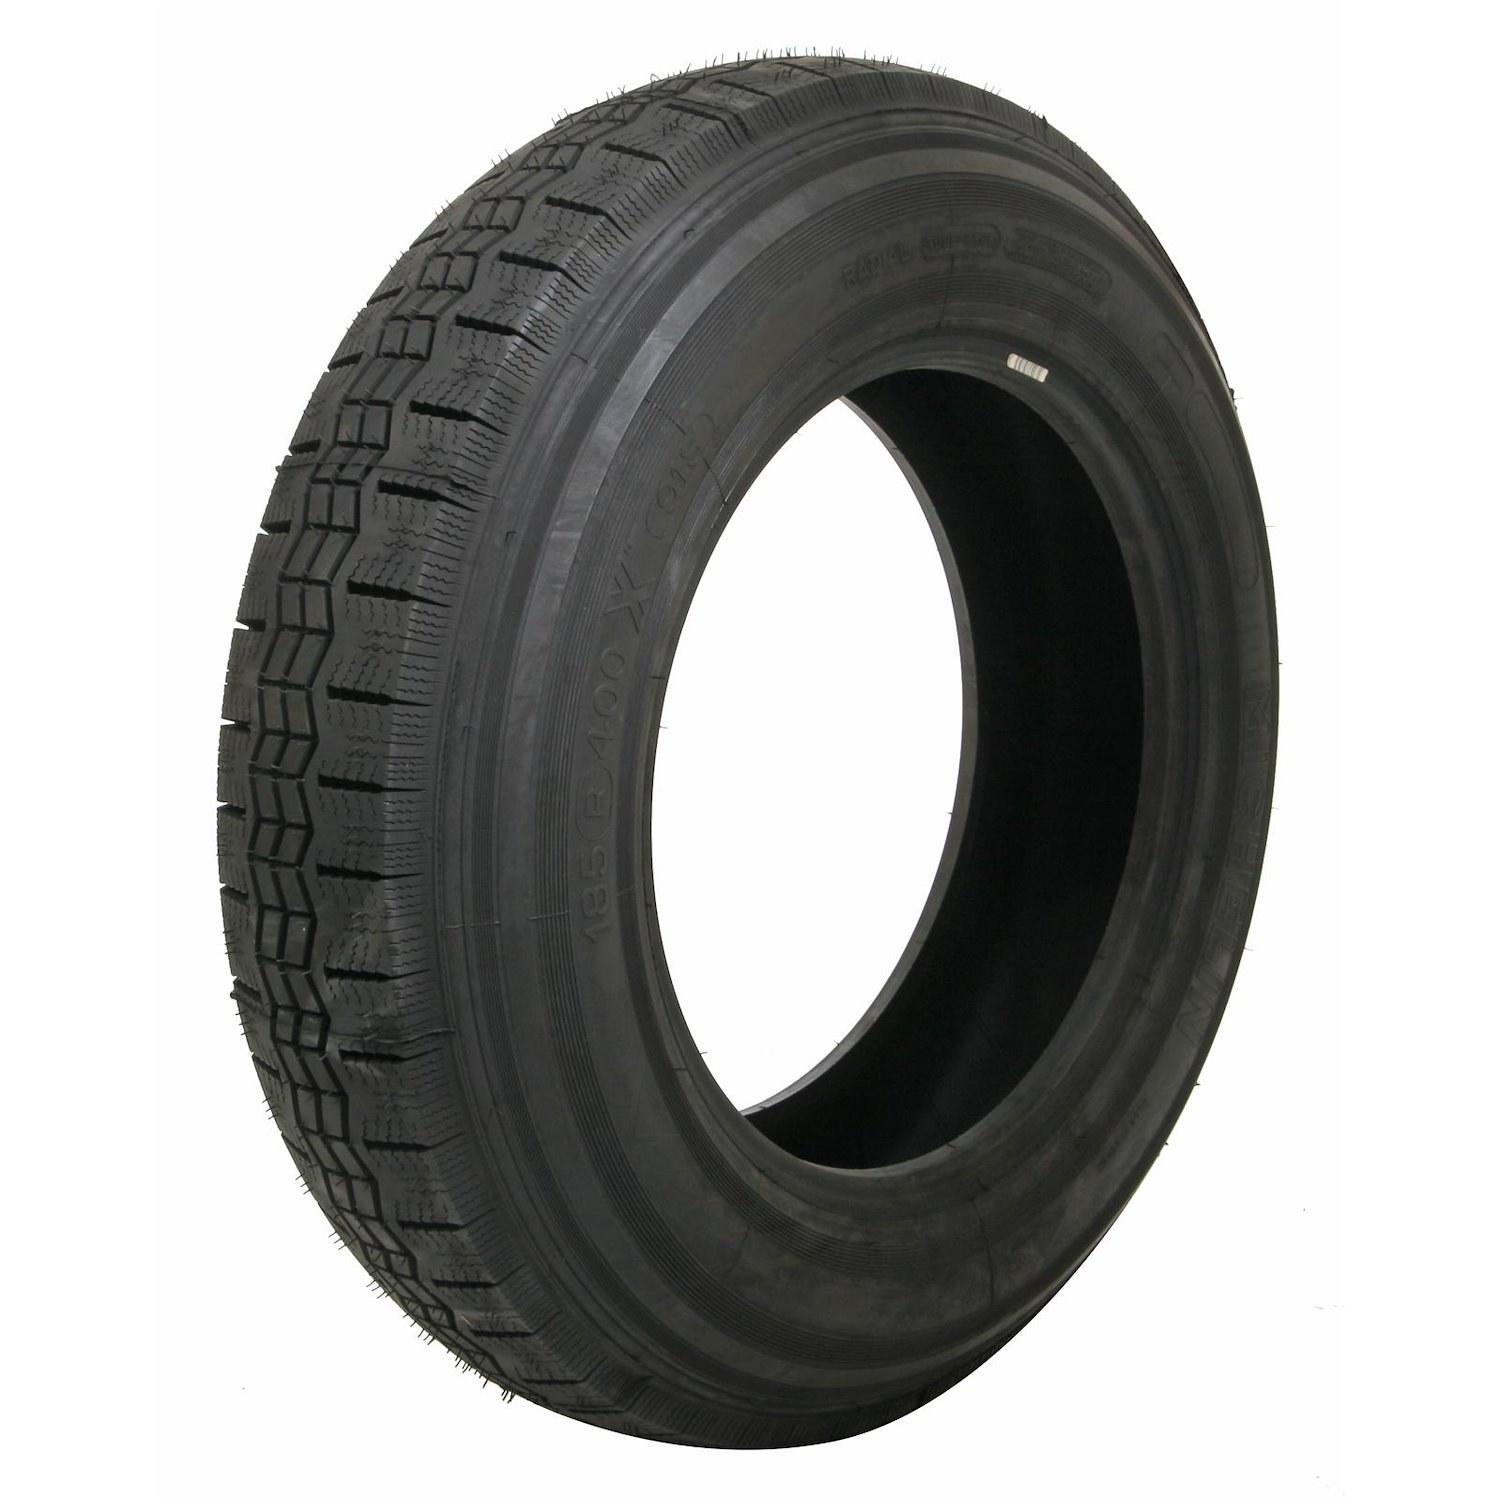 63189 Tire, Michelin X Radial, 185R400 91S